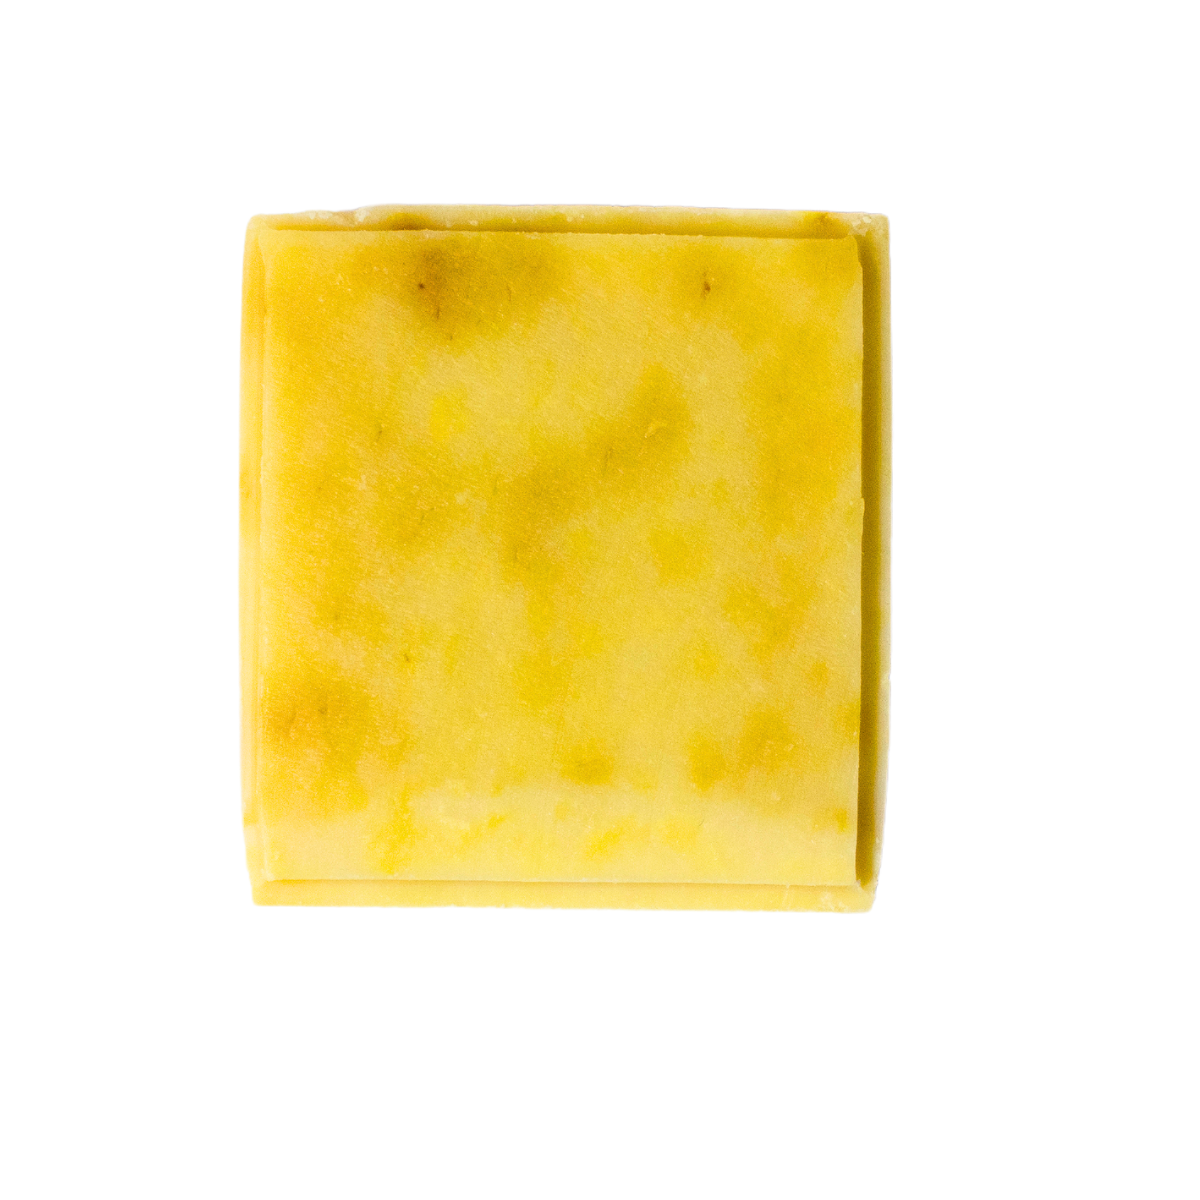 Saffron yellow ayurvedic soap bar 